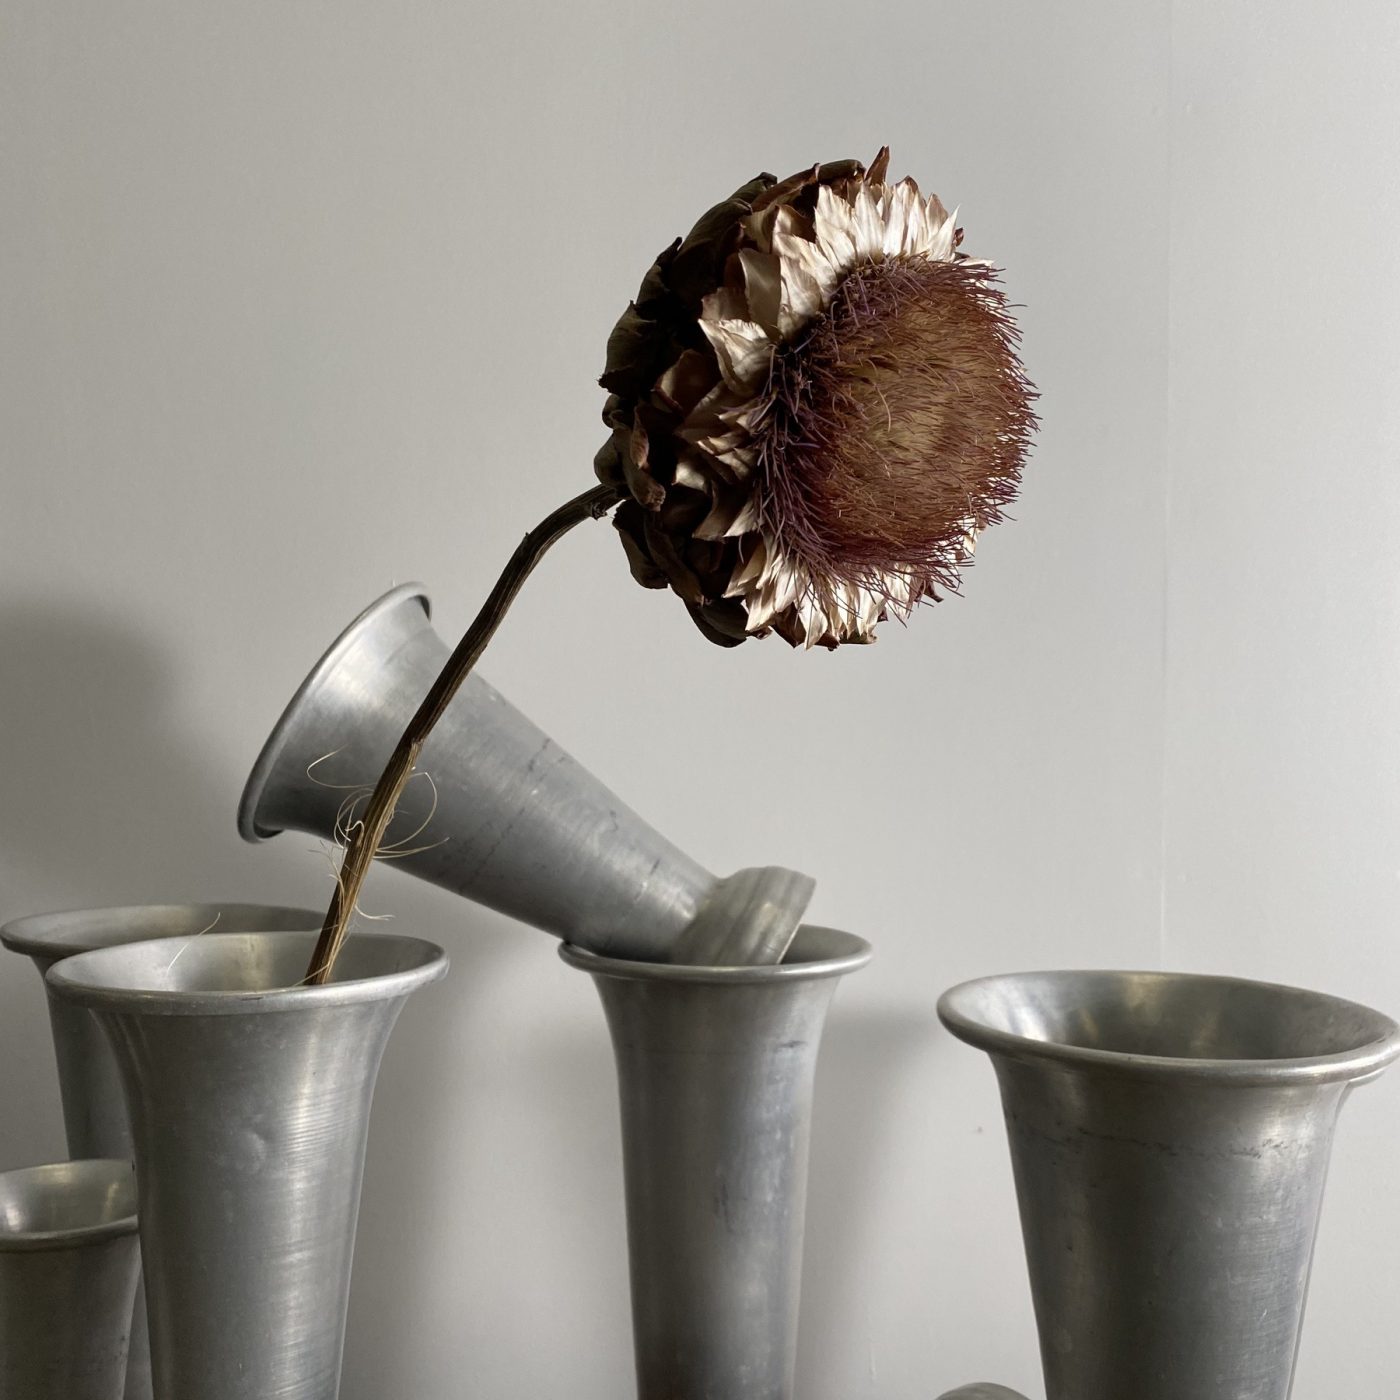 objet-vagabond-flowershop-vases0002